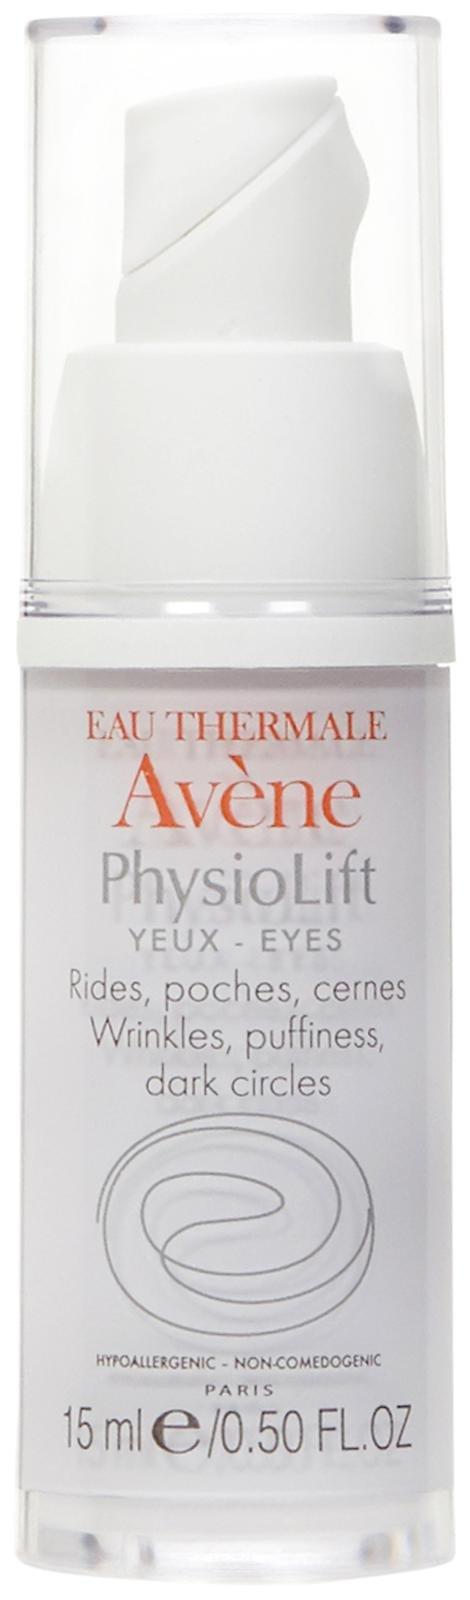 Avene Physiolift Eye Wrinkles, Puffiness, And Dark Circles - 1.01 Oz